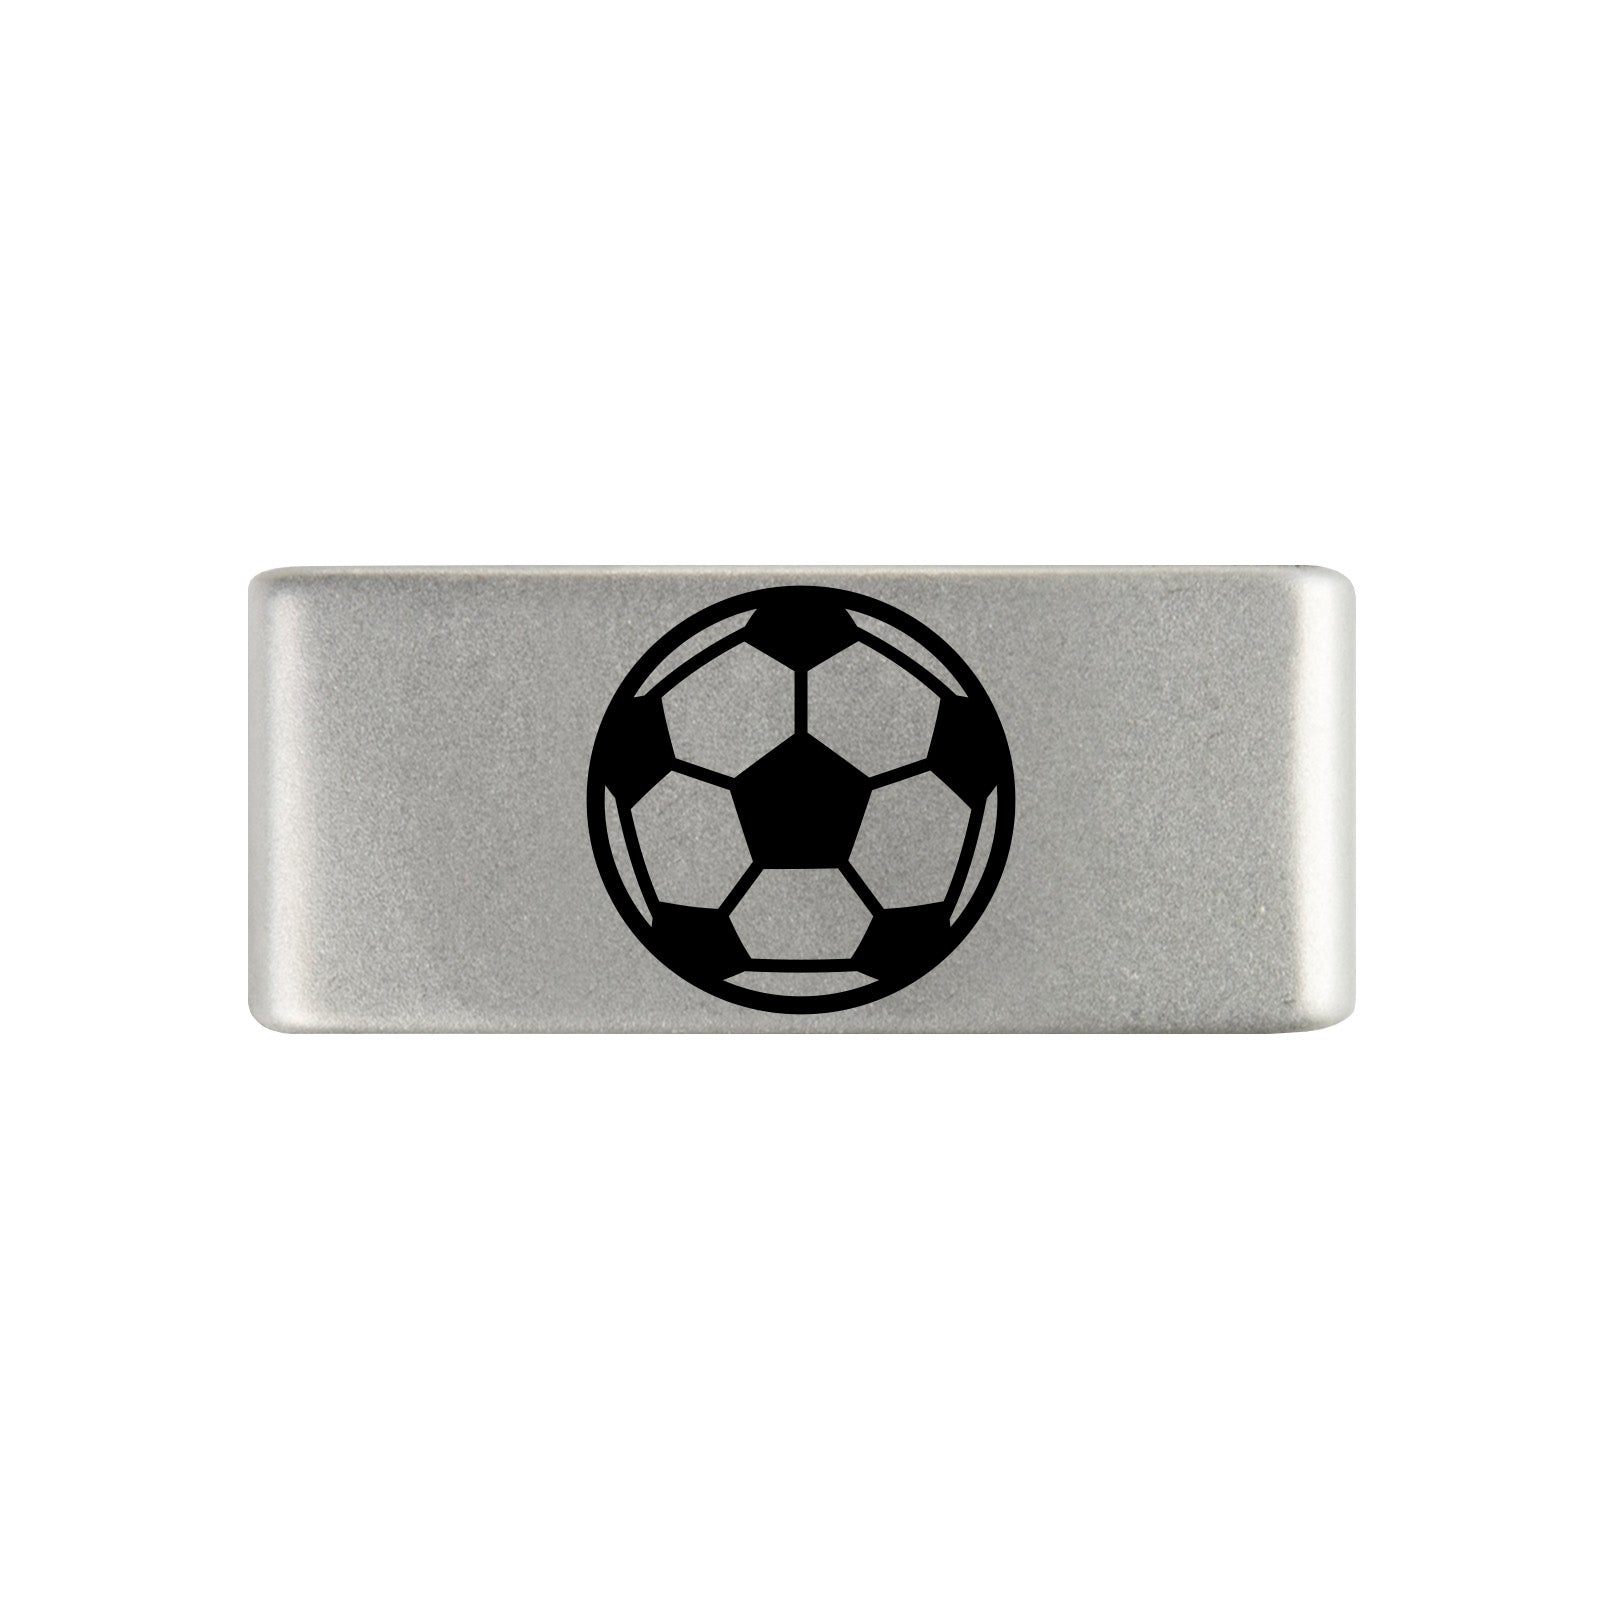 Soccer Badge Badge 13mm - ROAD iD